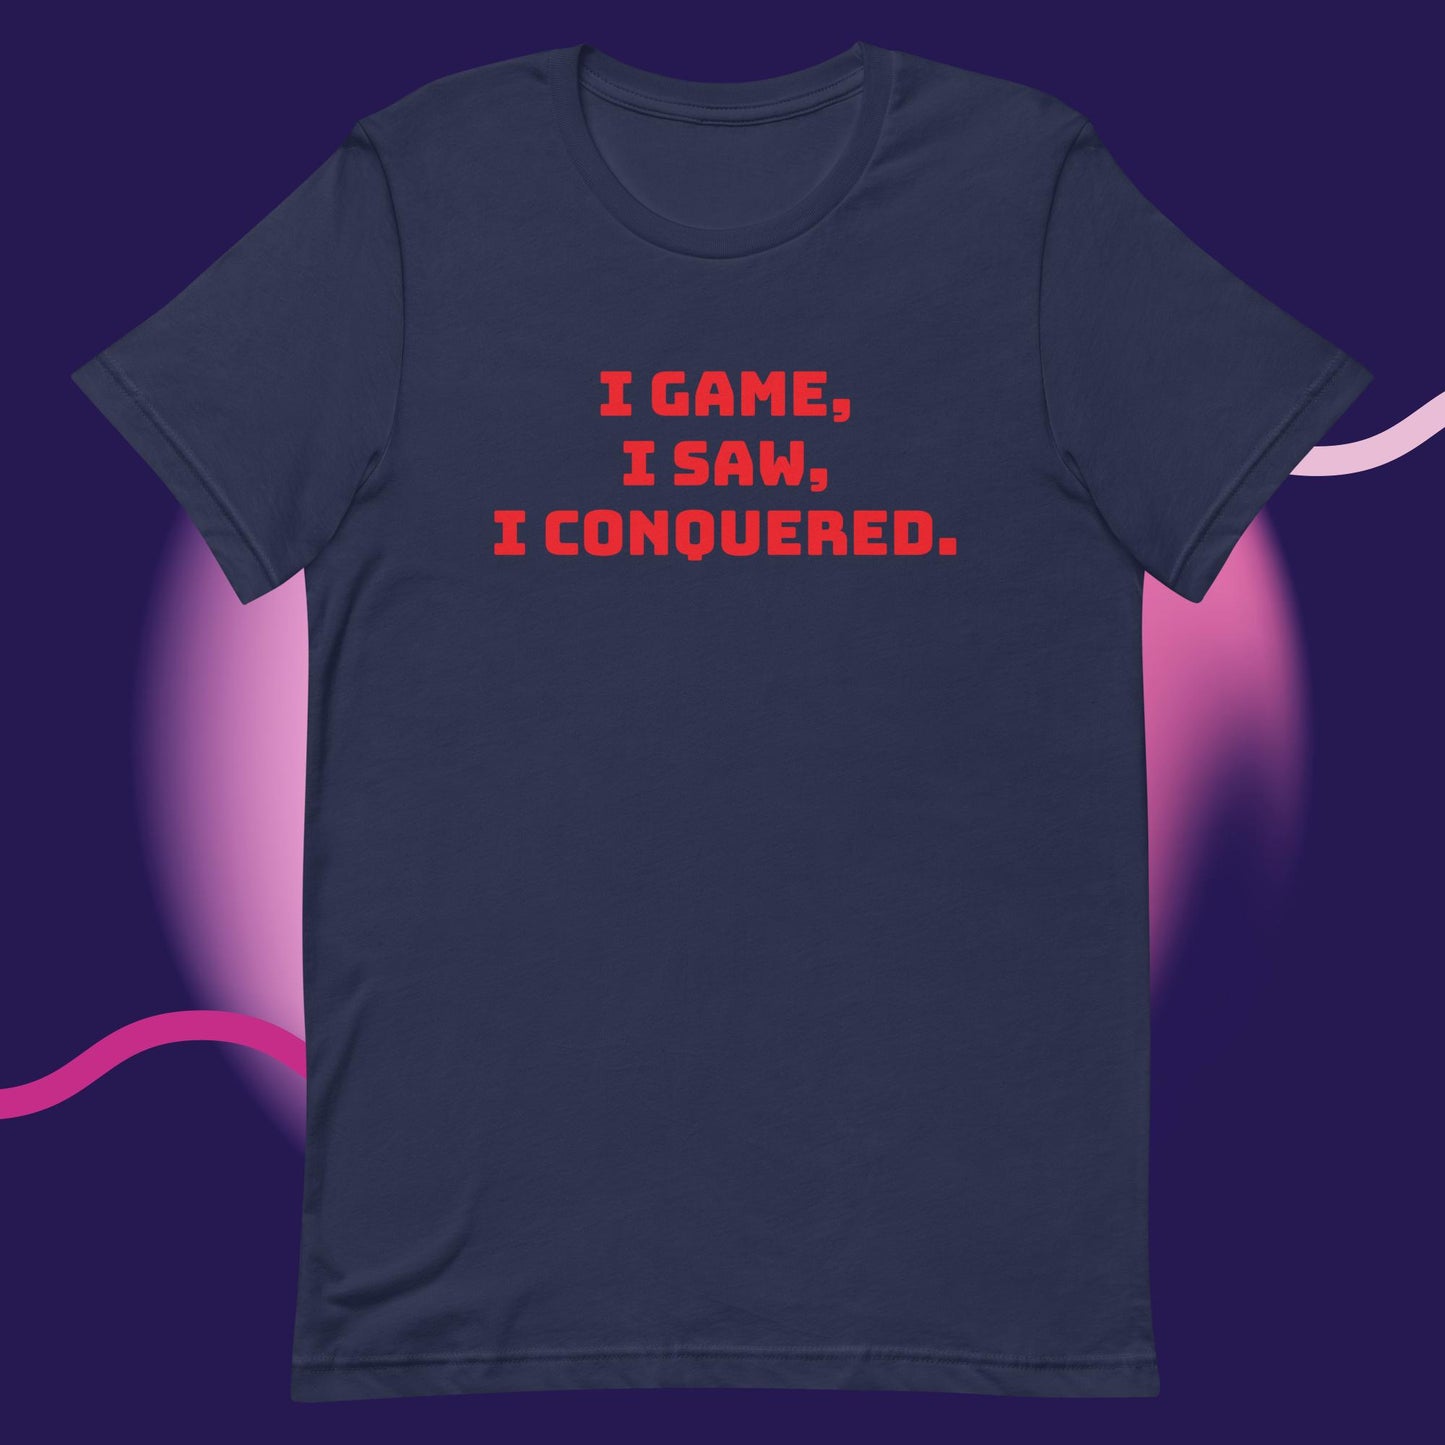 I game, I saw, I conquered. Unisex t-shirt.